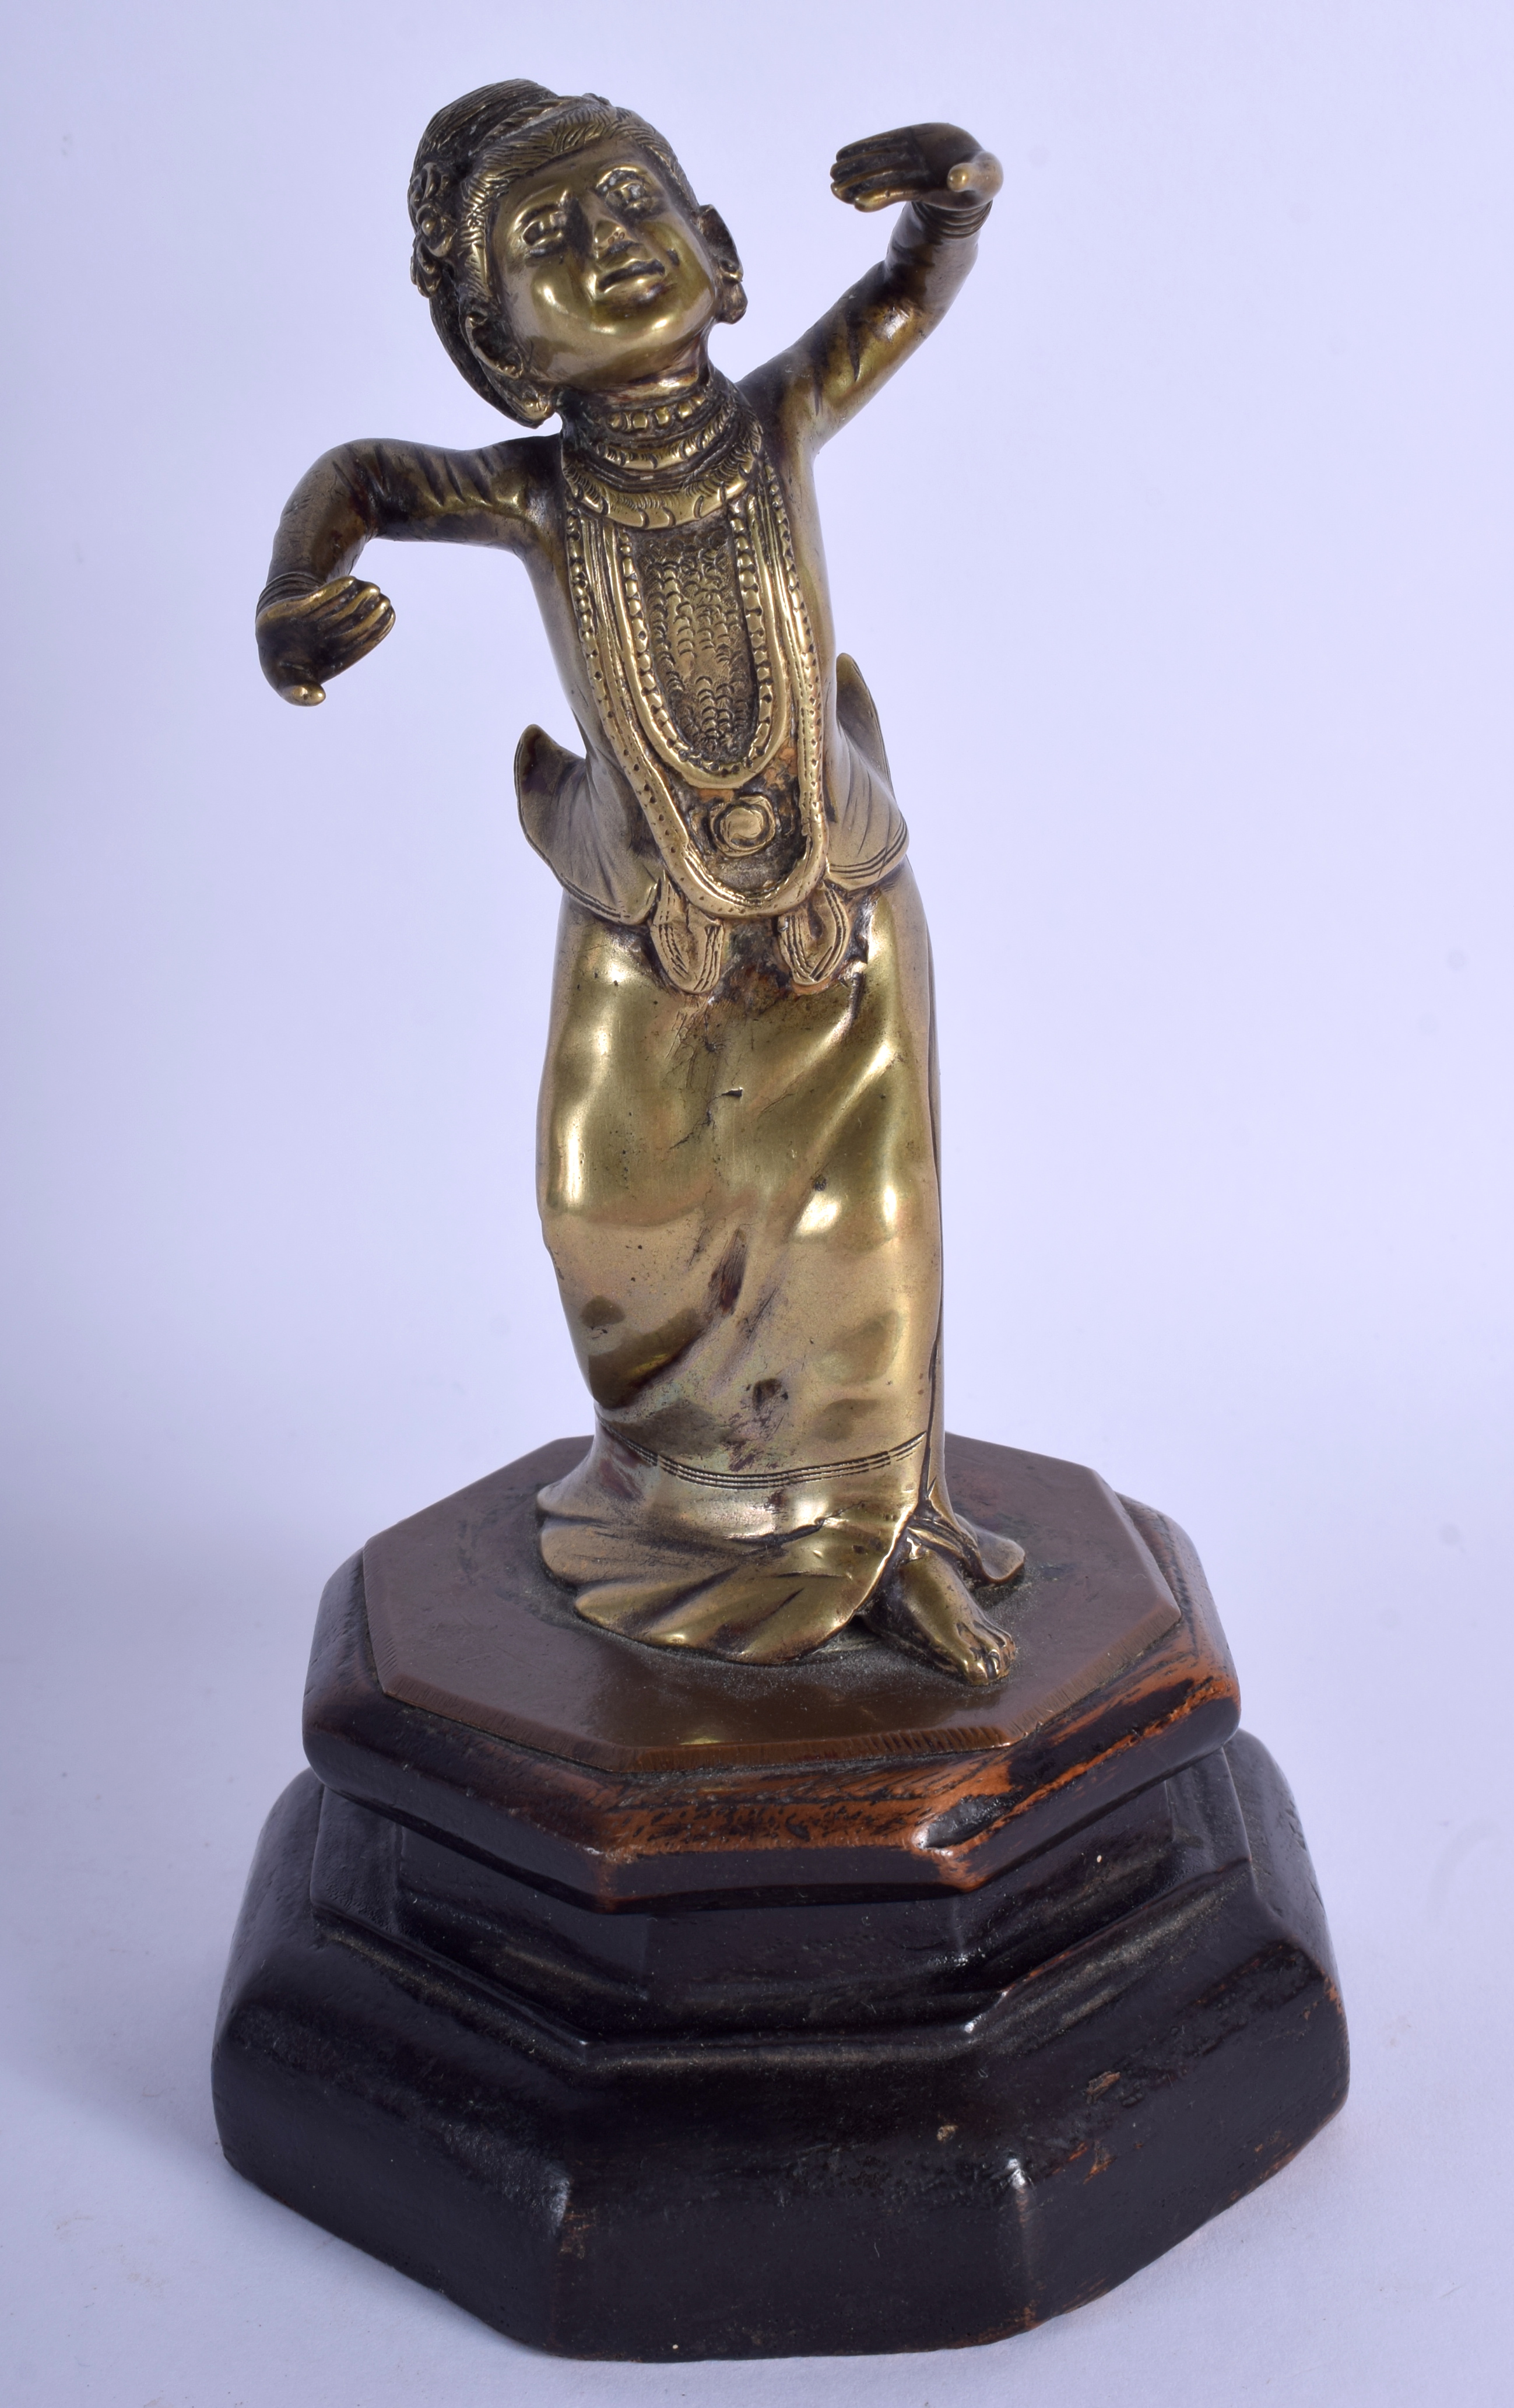 A 19TH CENTURY INDIAN BURMESE BRONZE FIGURE OF A DANCING LADY. Bronze 13 cm high.